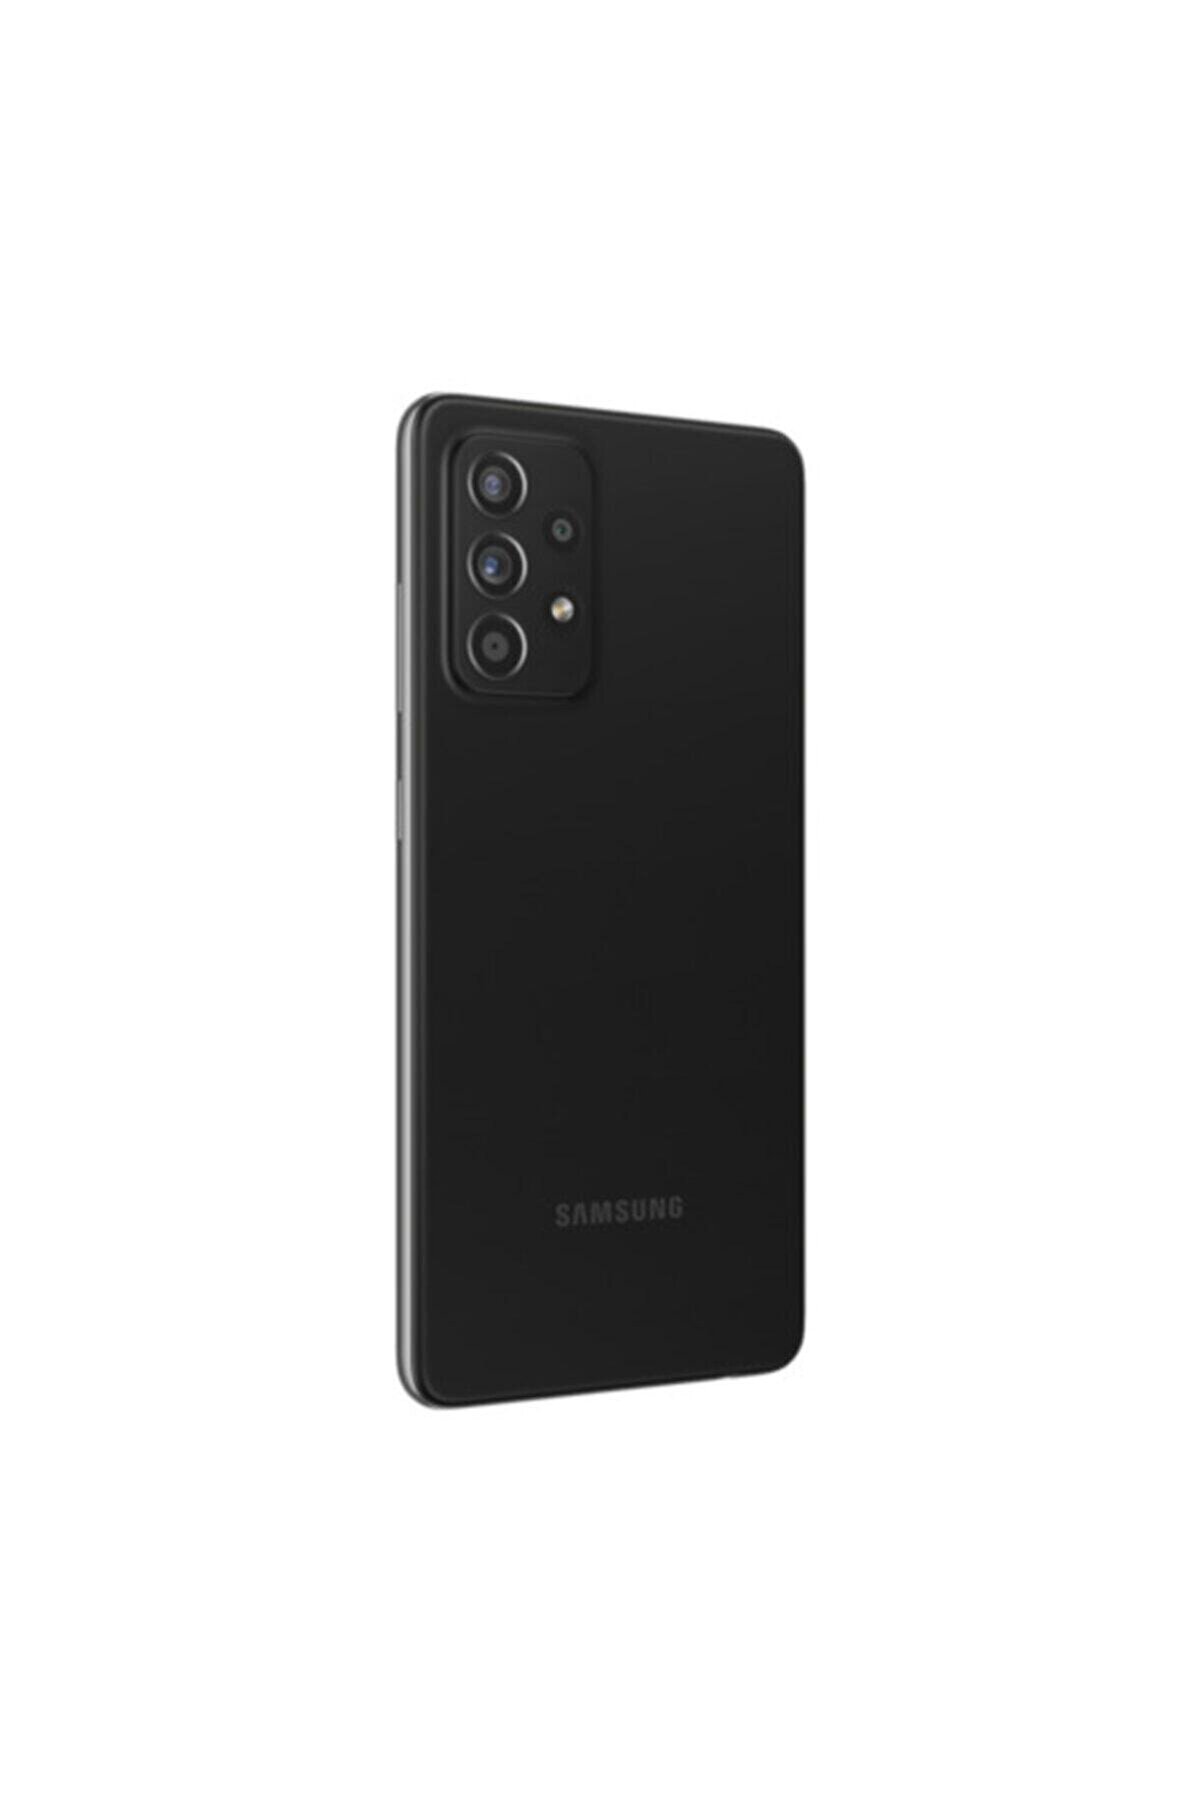 Samsung Galaxy A52s 128 GB siyah Cep Telefonu (Samsung Türkiye Garantili)